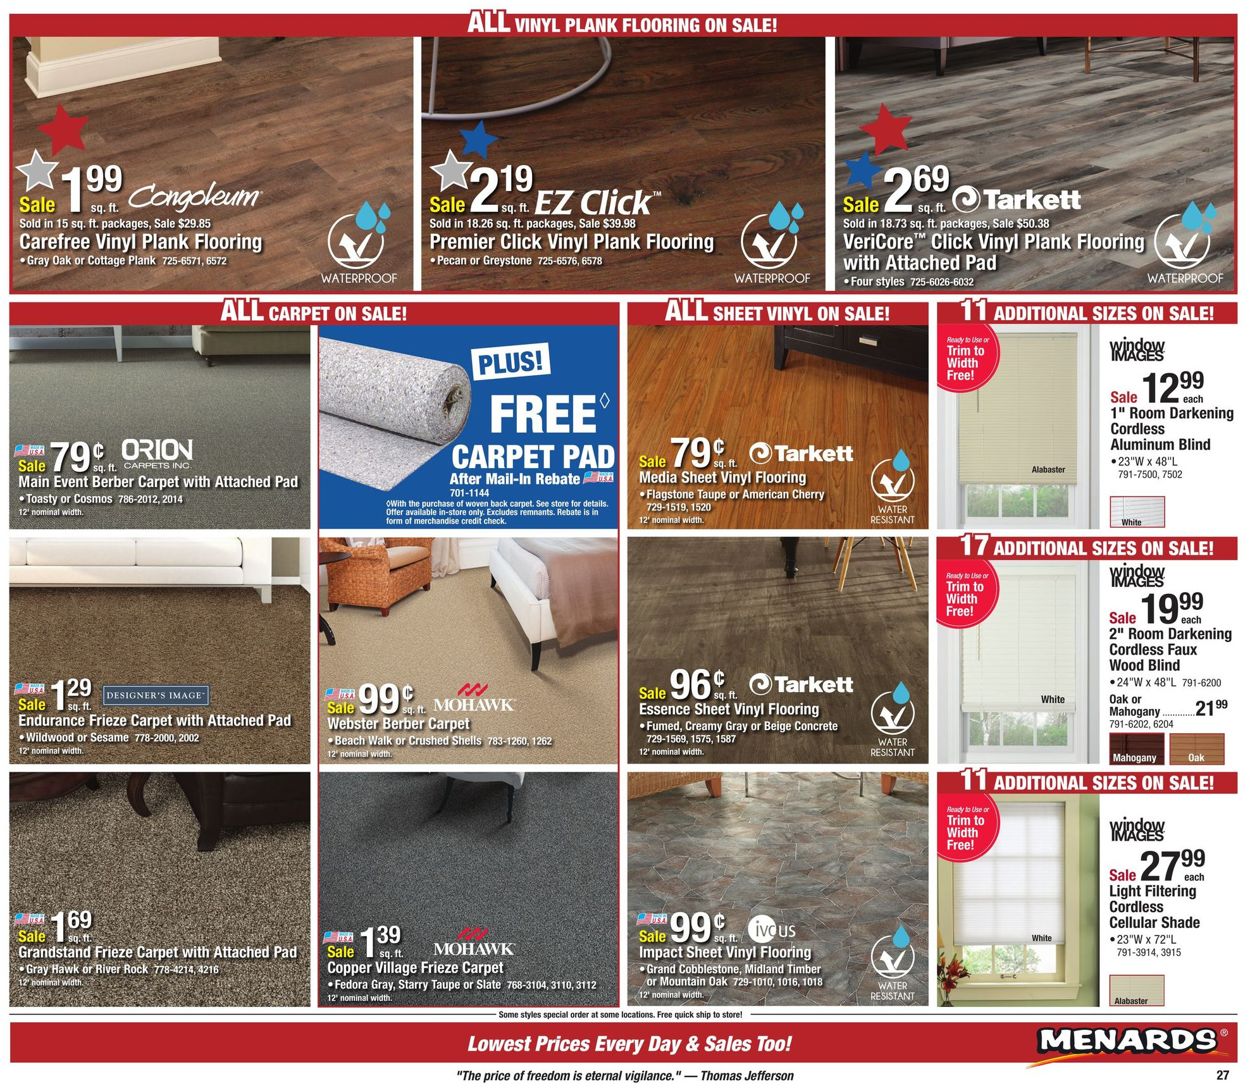 Menards Cur Weekly Ad 06 23 07, Congoleum Vinyl Plank Flooring Menards